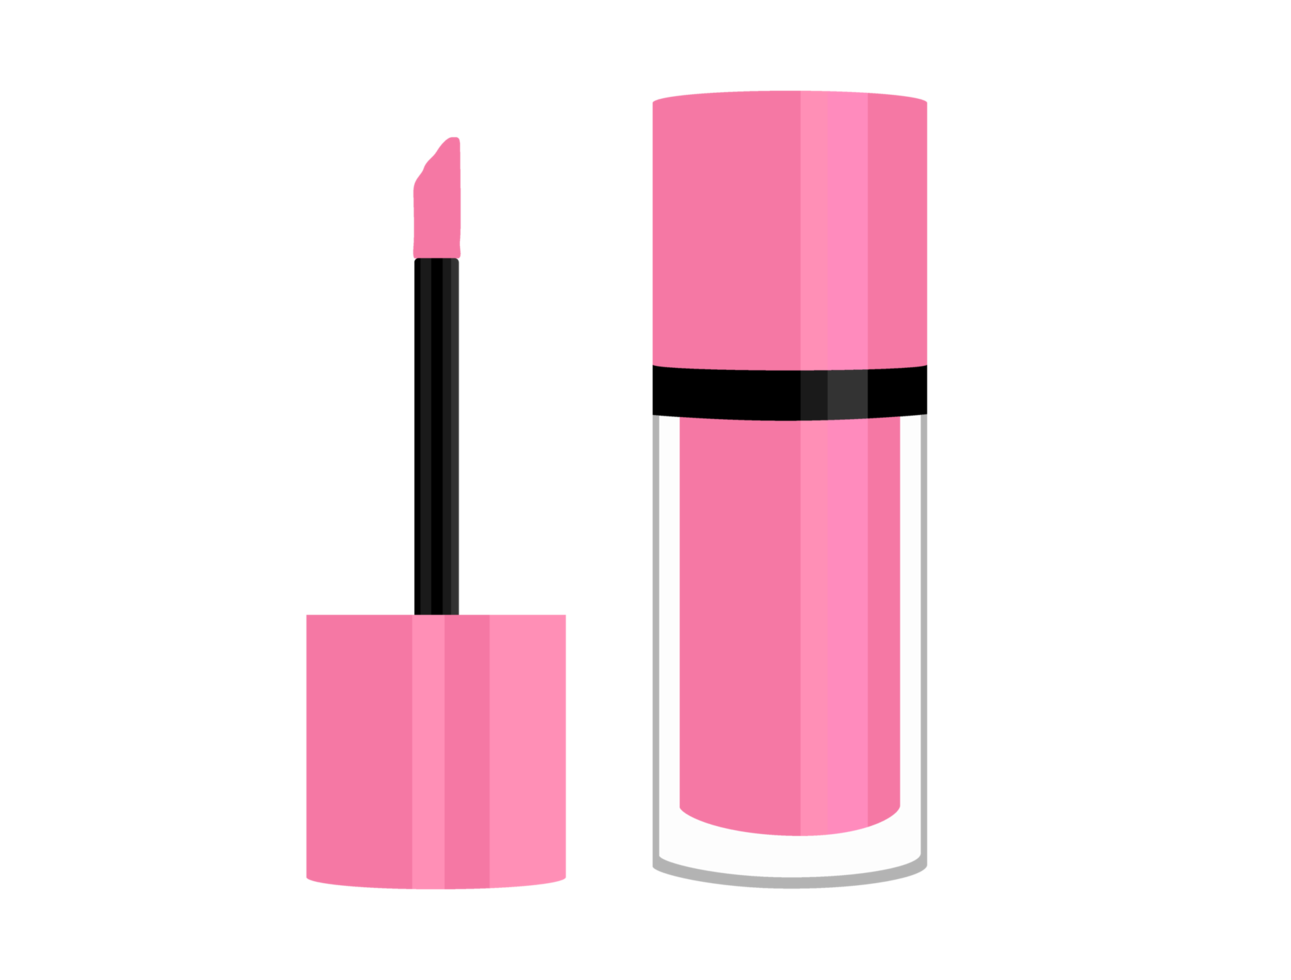 herramientas de maquillaje para mujeres - lápiz labial png